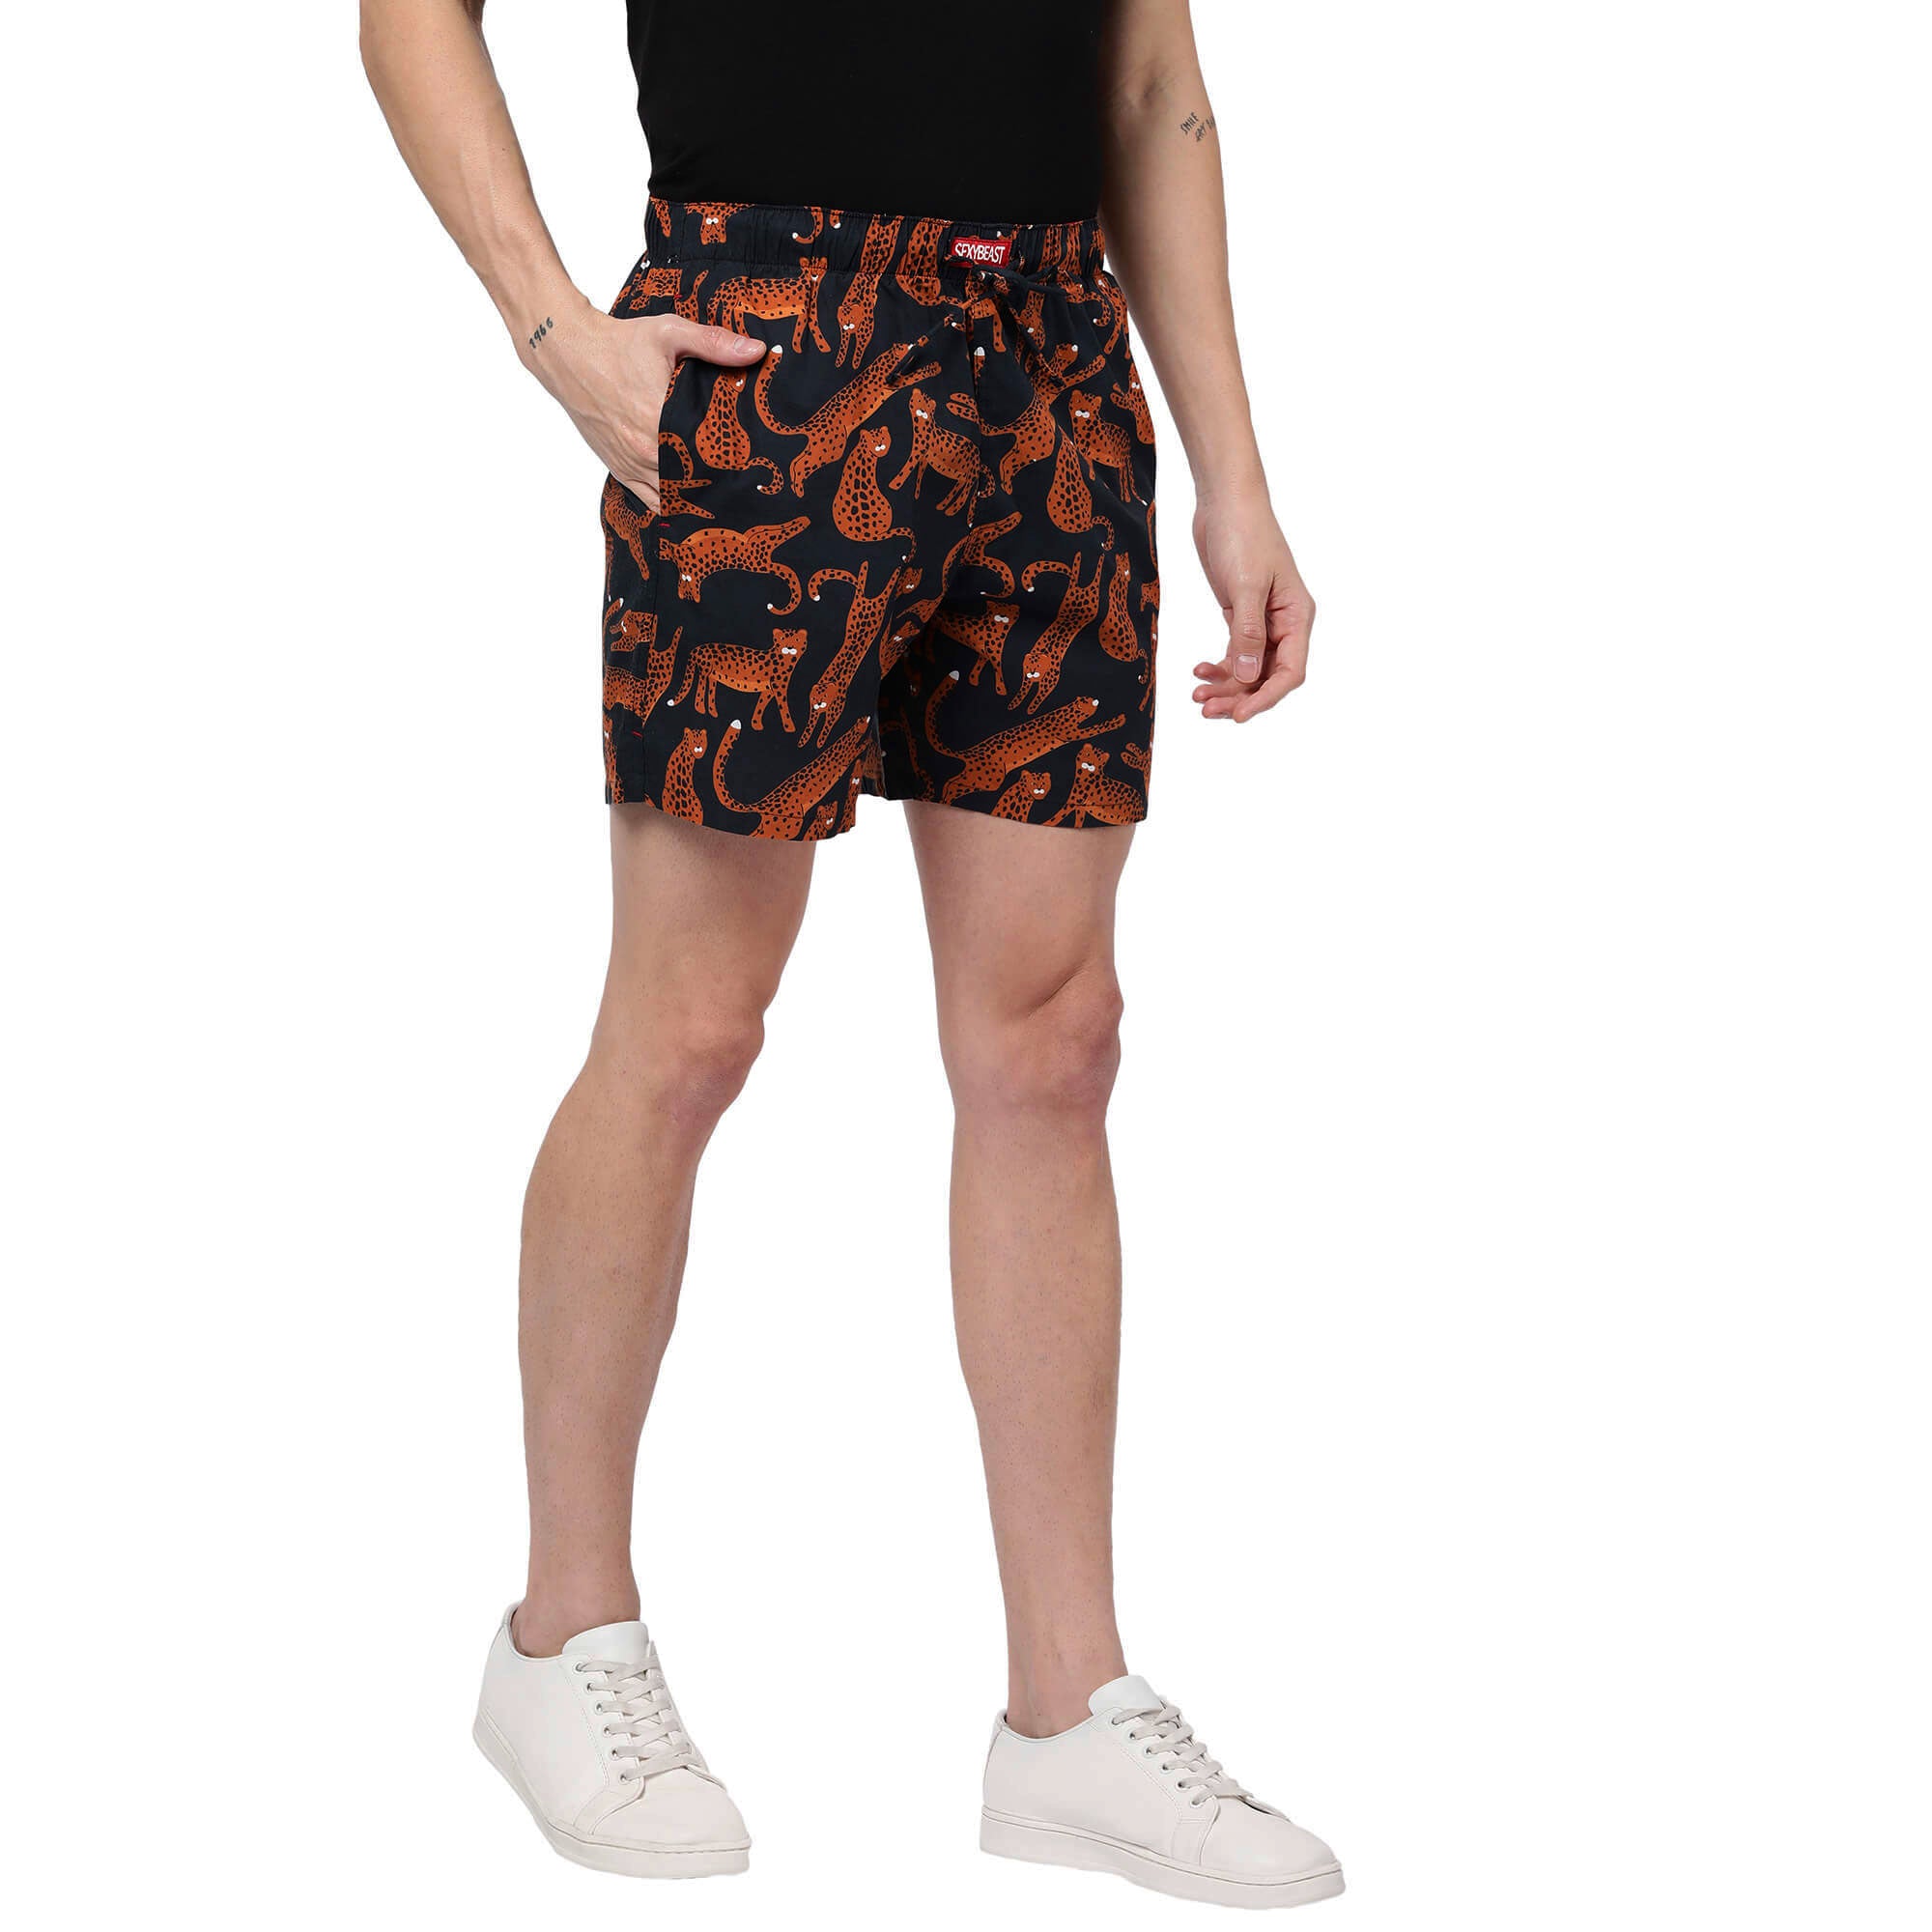 Stylish Shorts for Men